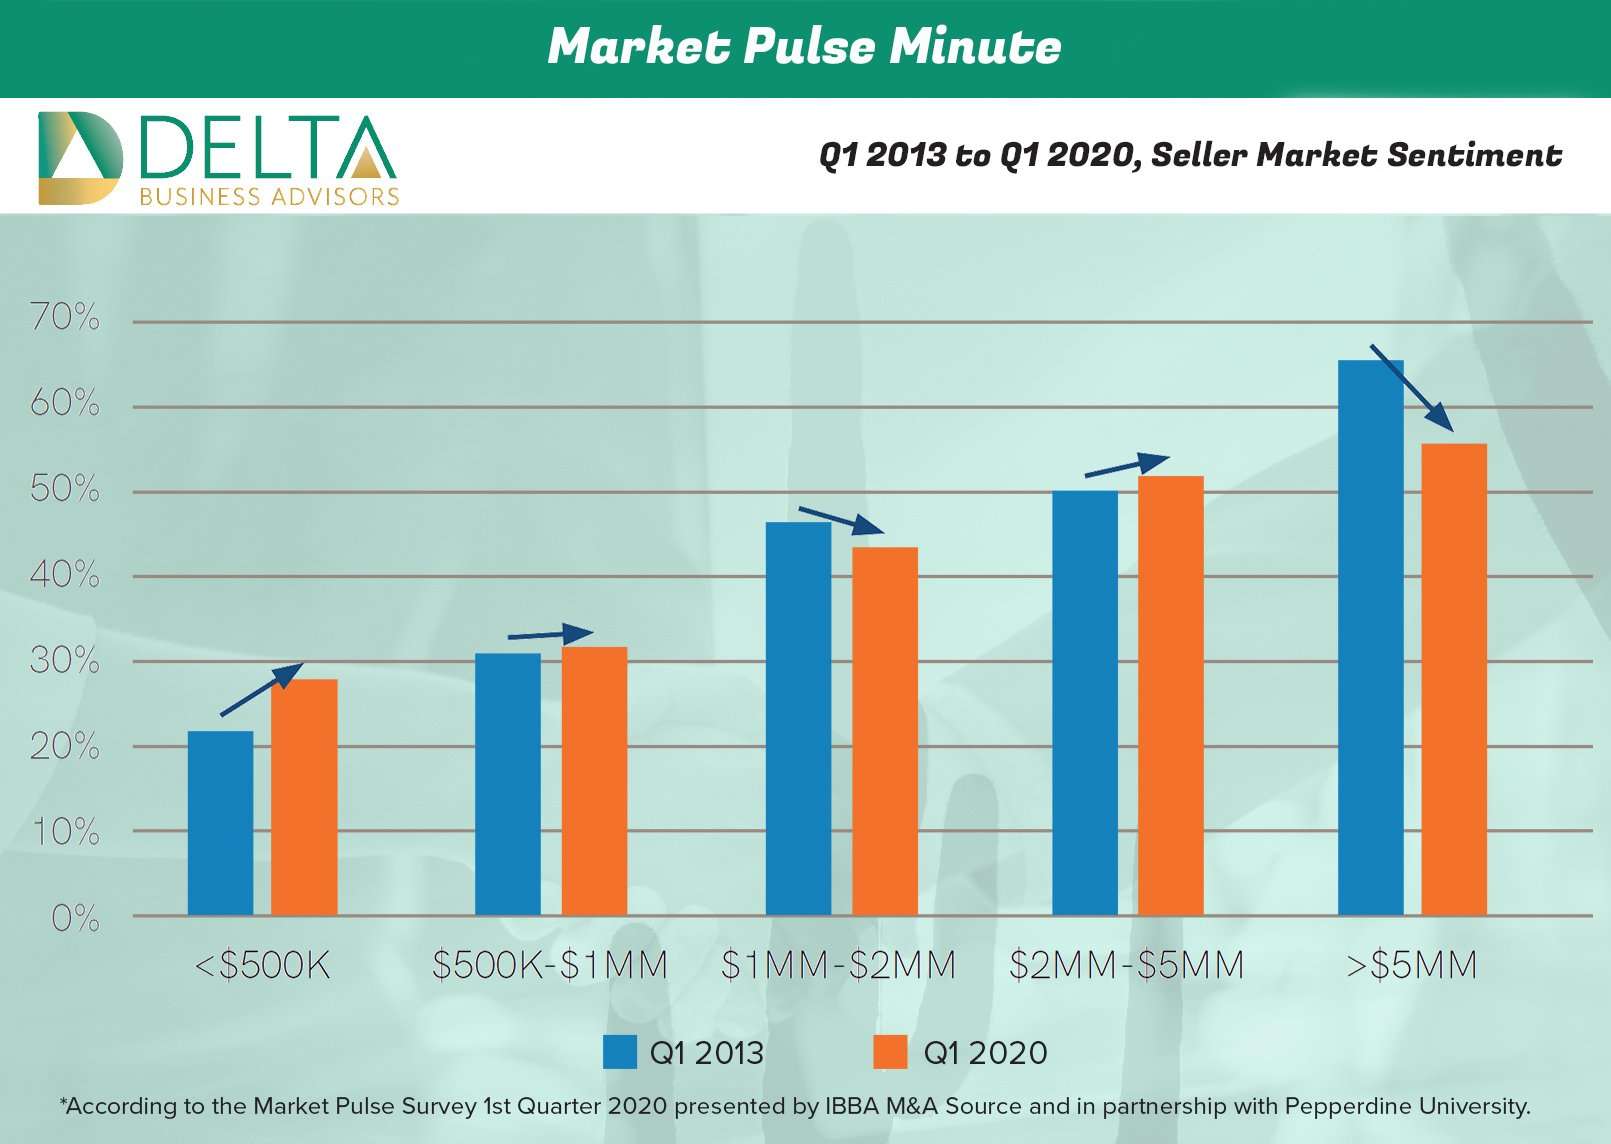 Q1 2013 to Q1 2020, seller market sentiment